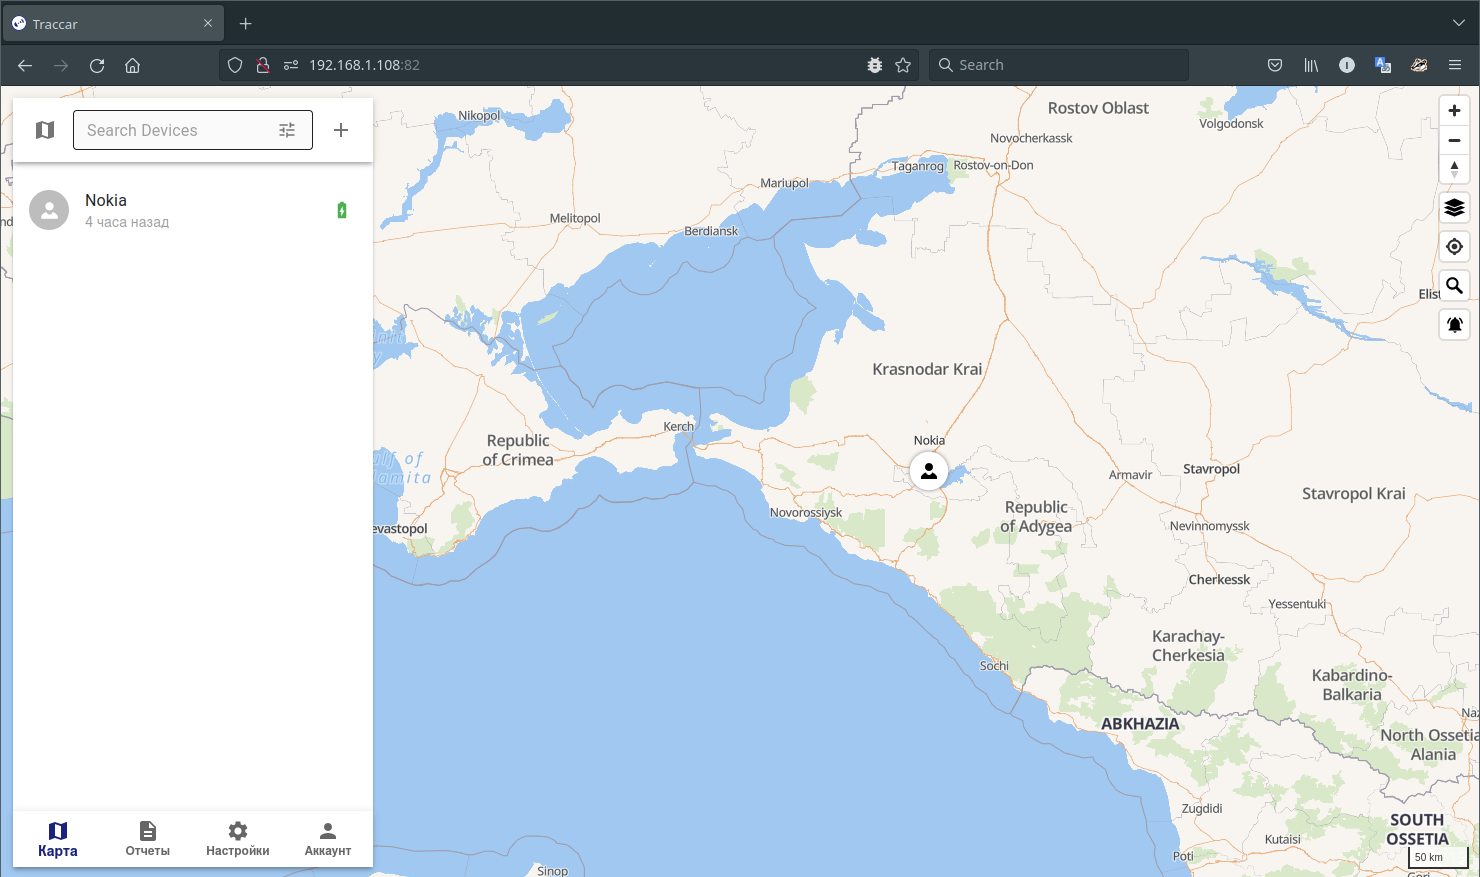 Веб интерфейс Traccar, точка на карте с геопозицией устройства